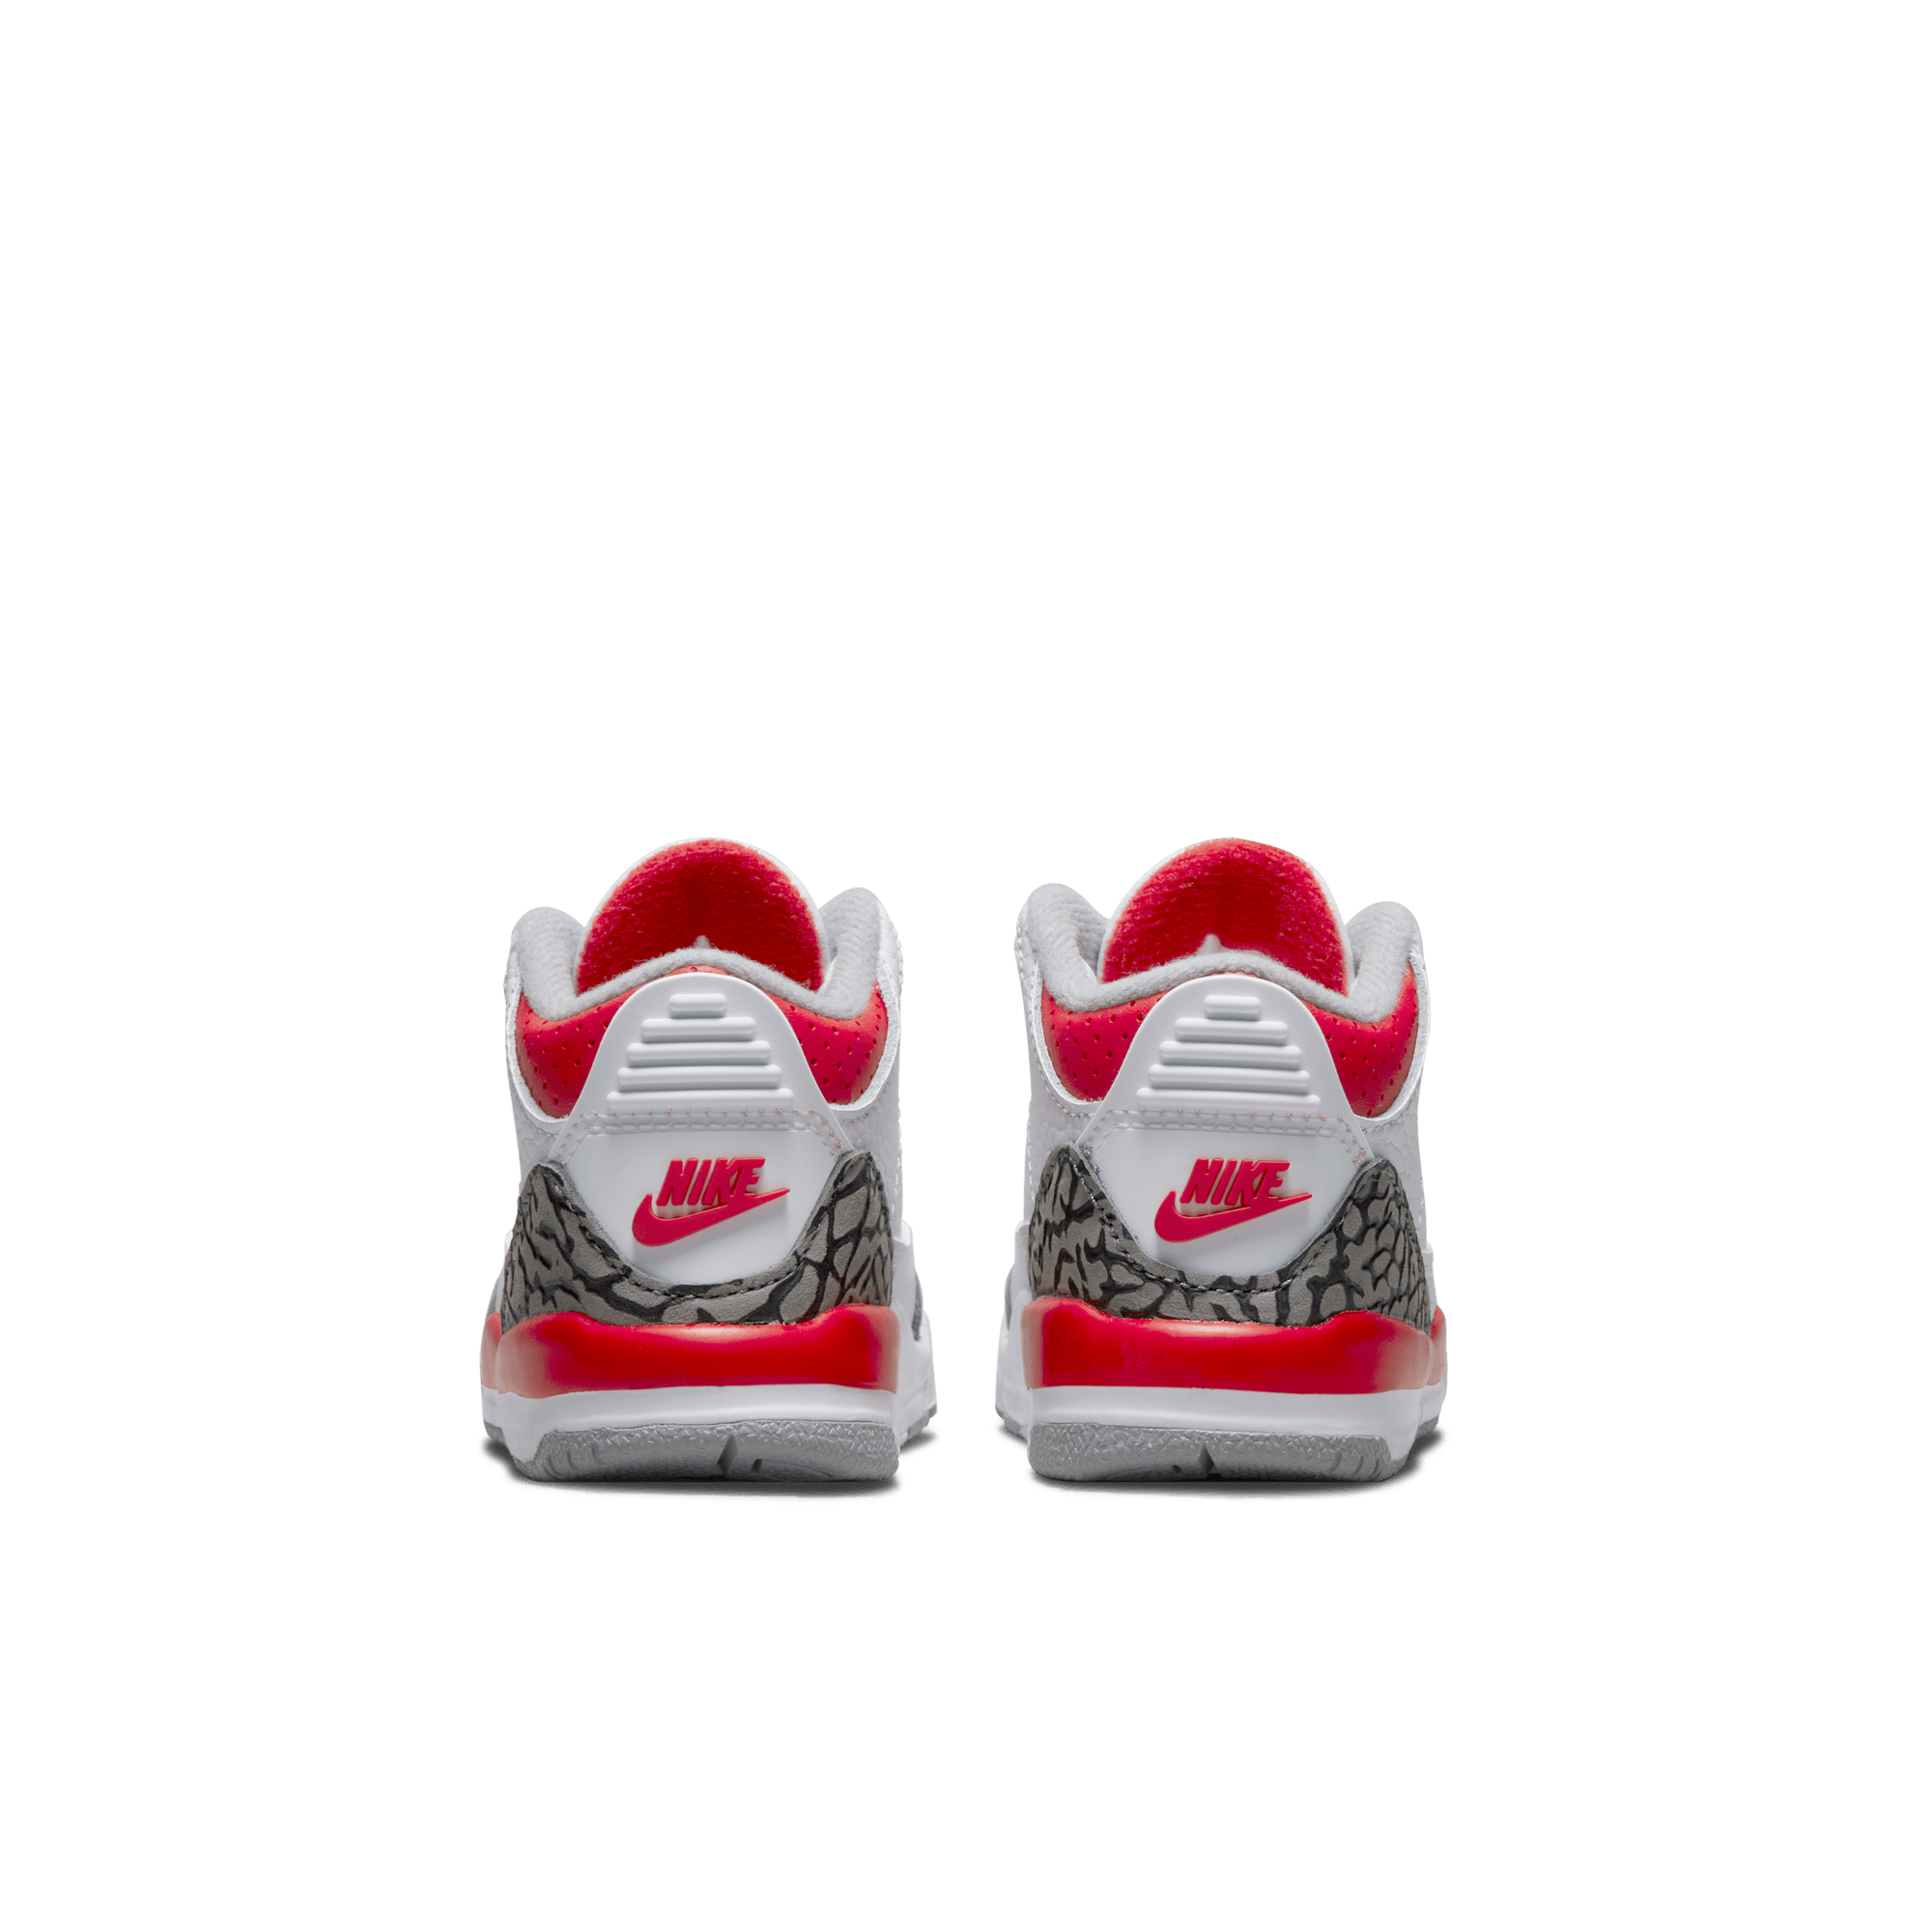 Youth Air Jordan 3 Retro "Fire Red' Toddler